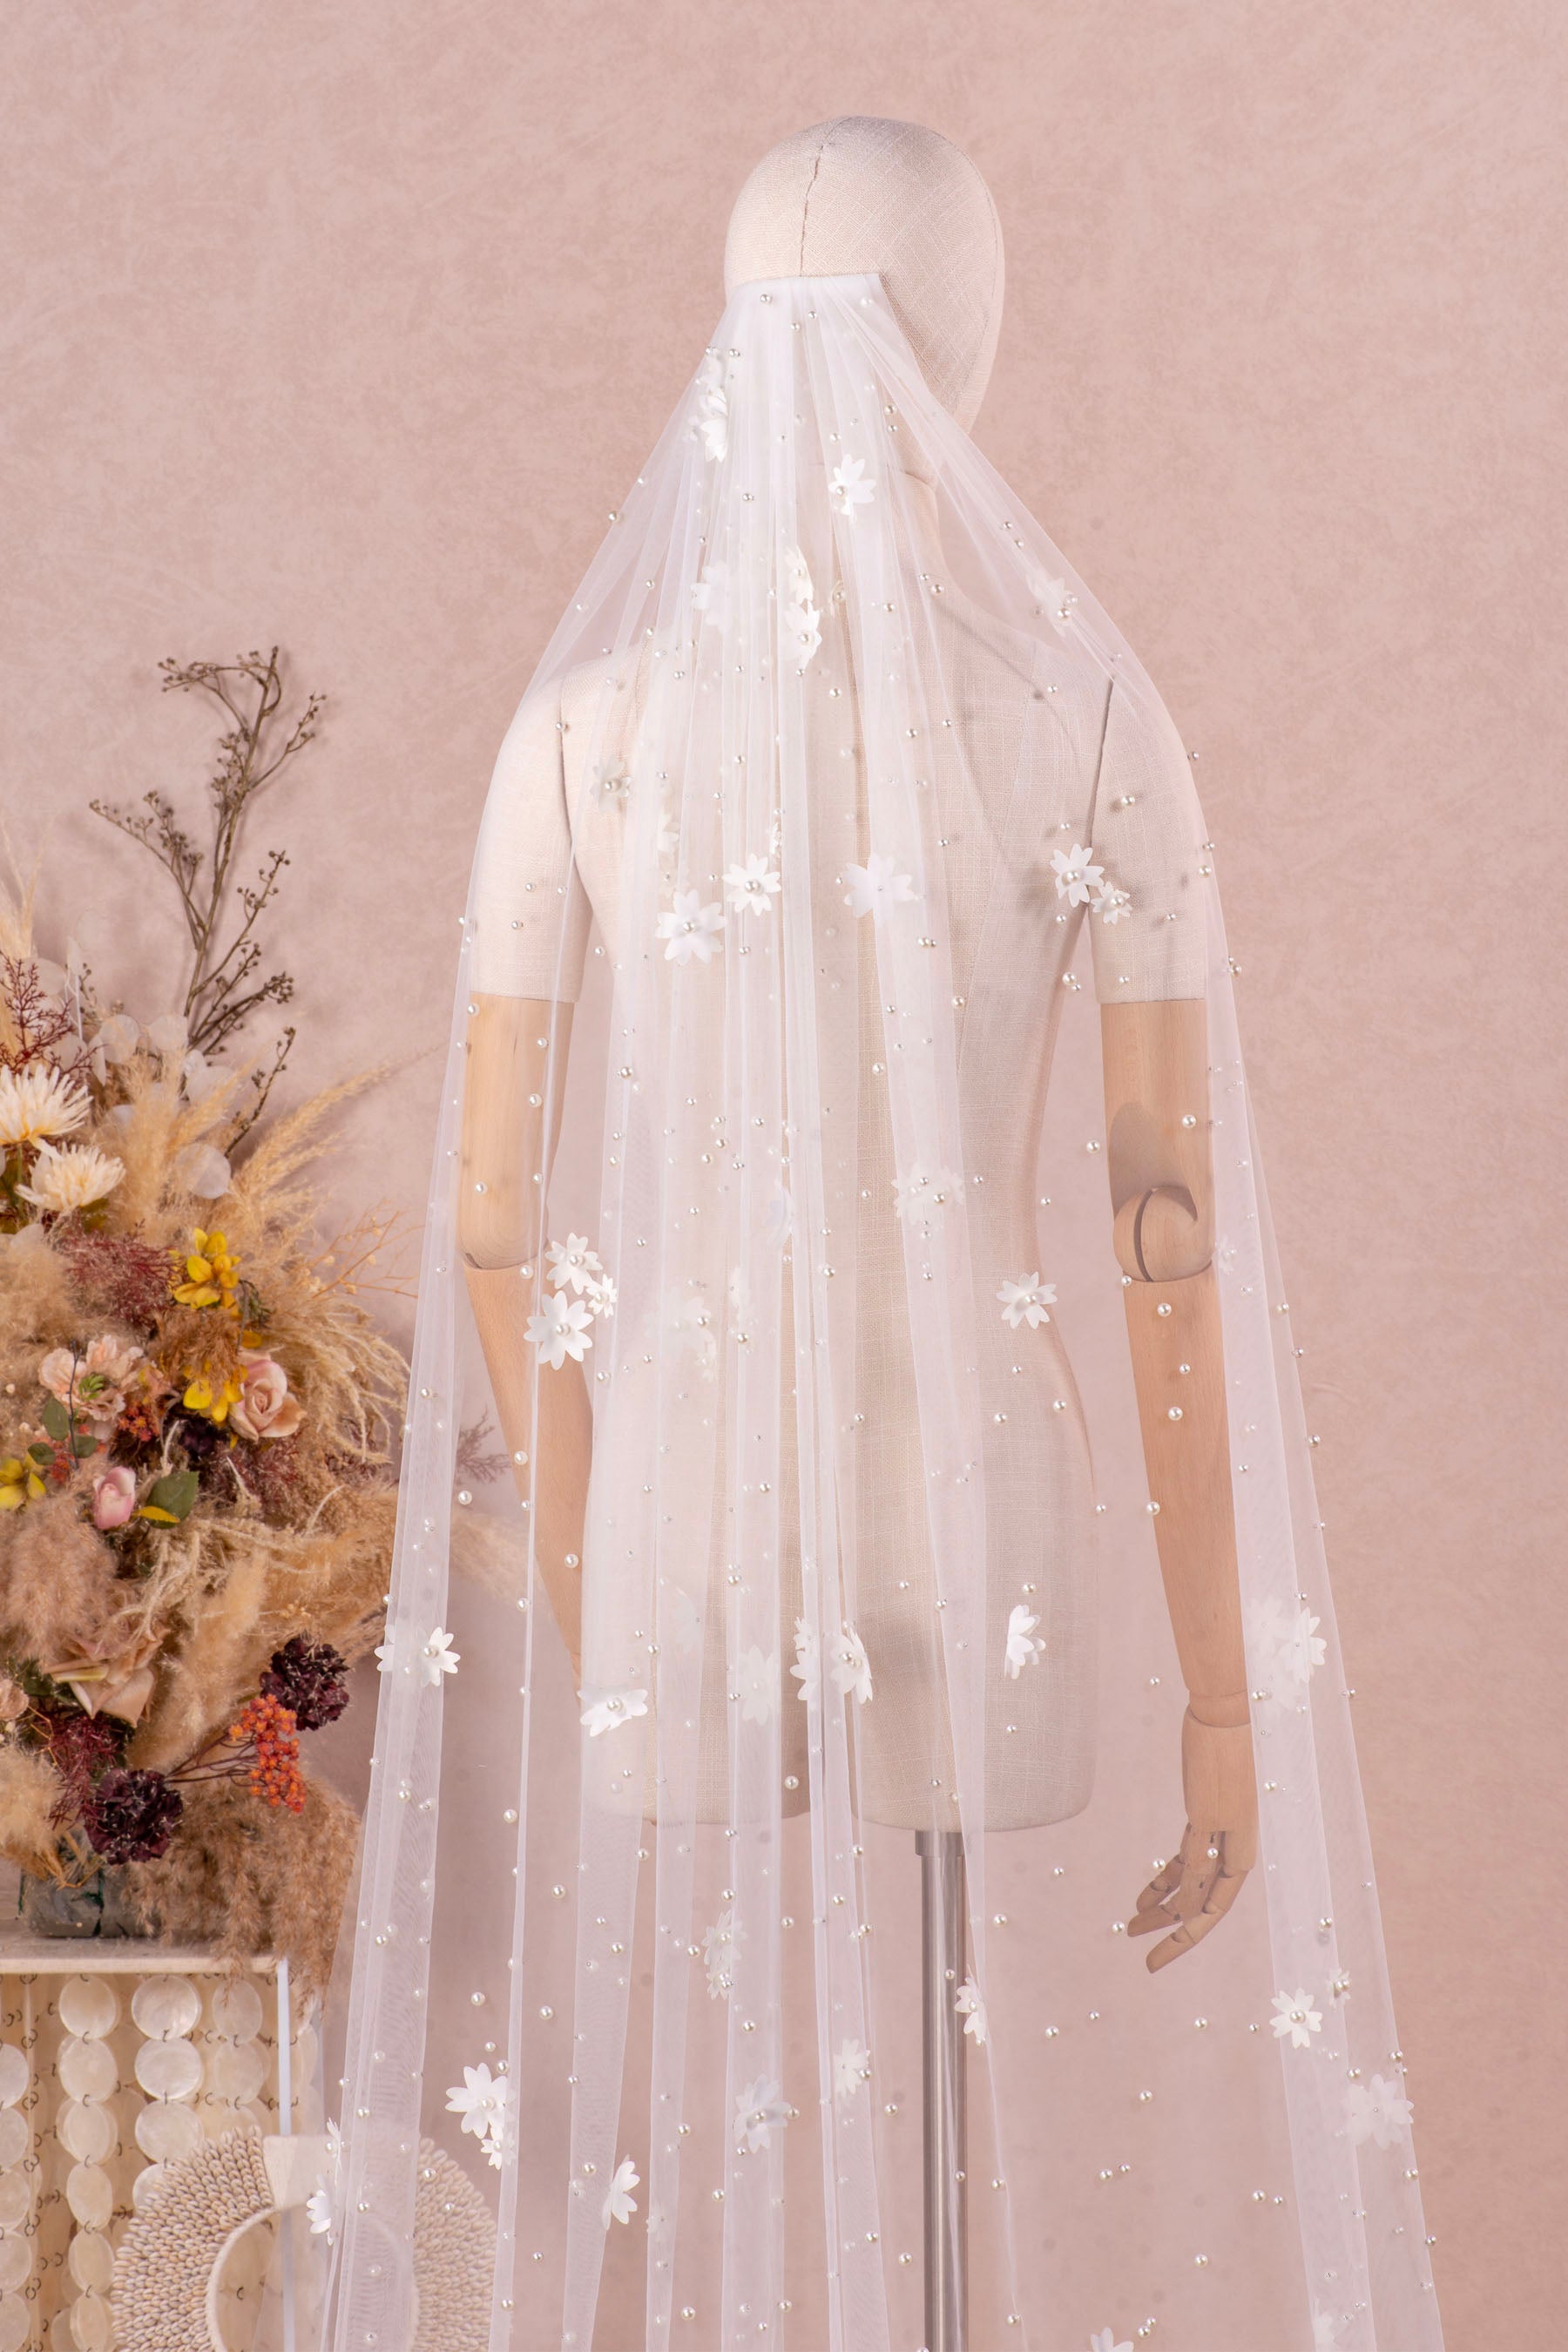 wholesale wedding veils bridal accessories - Brydealo Factory